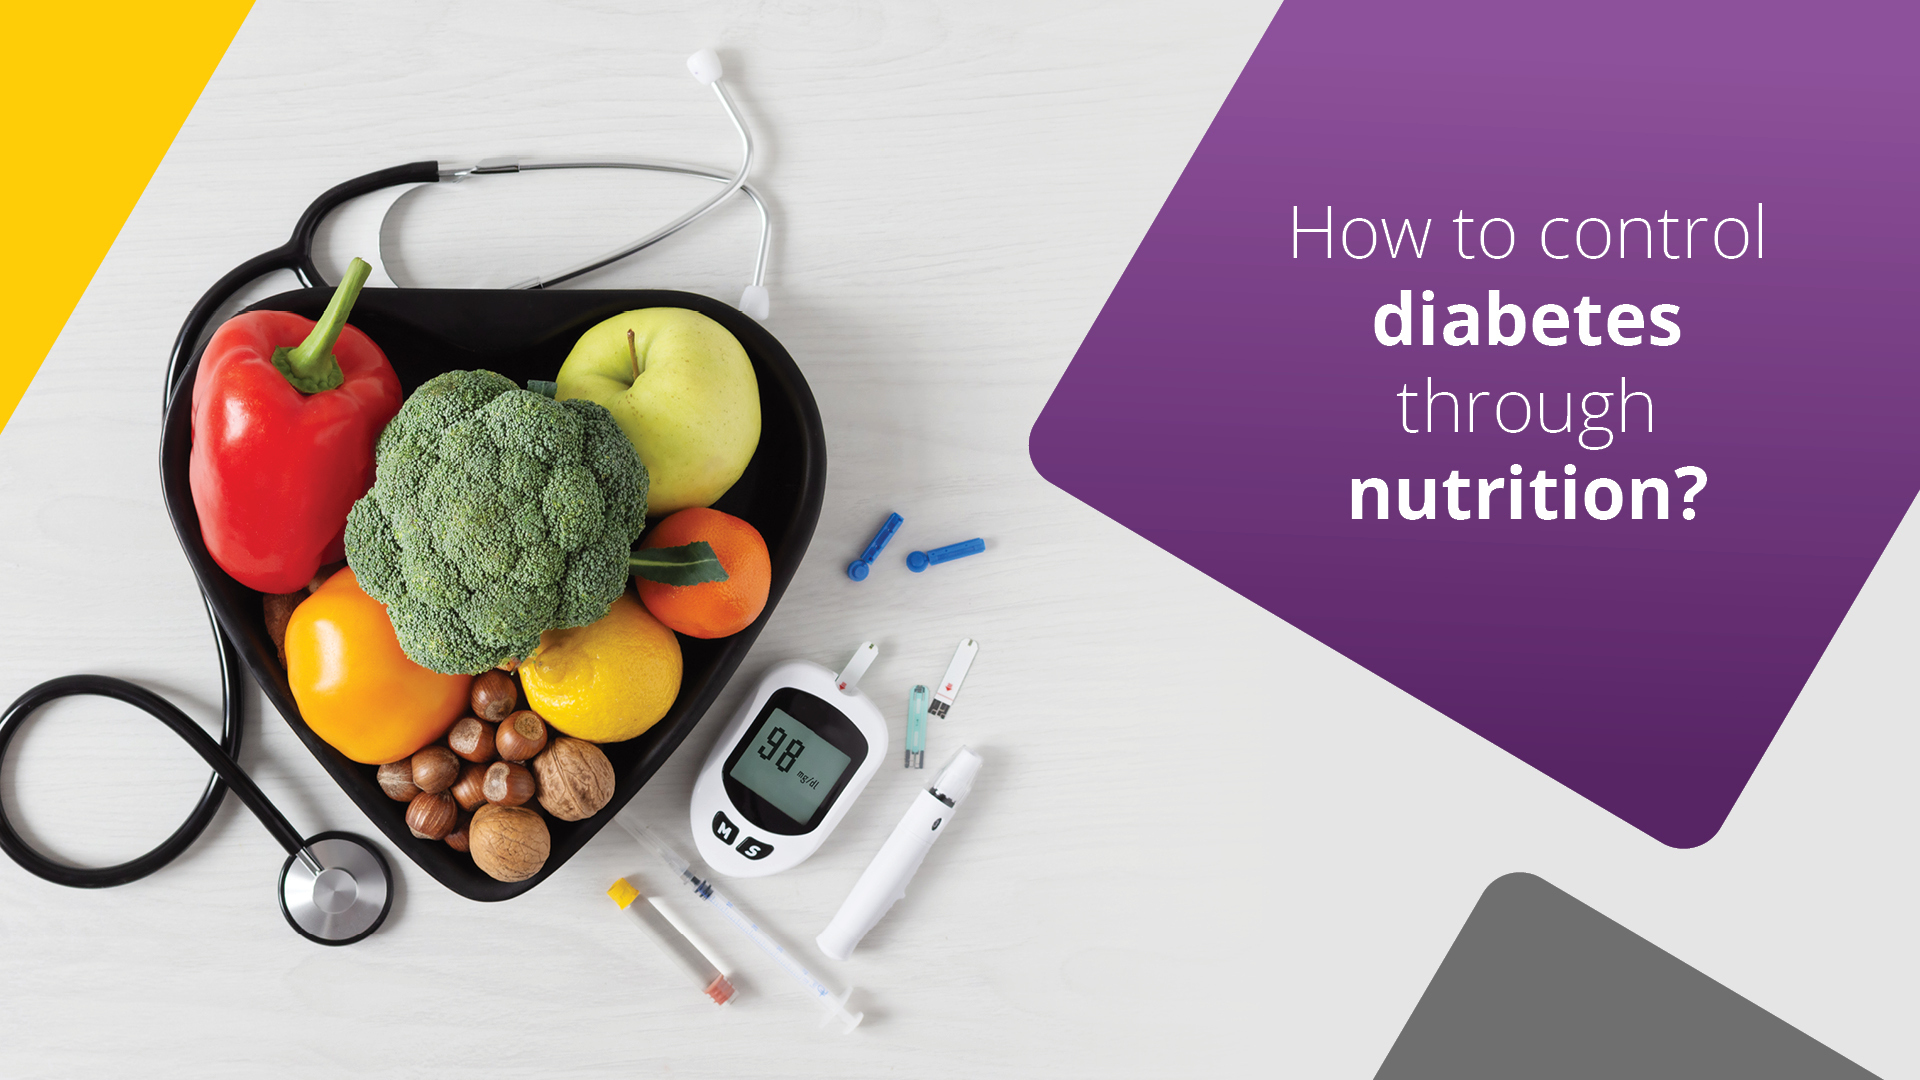 Controlling diabetes through nutrition